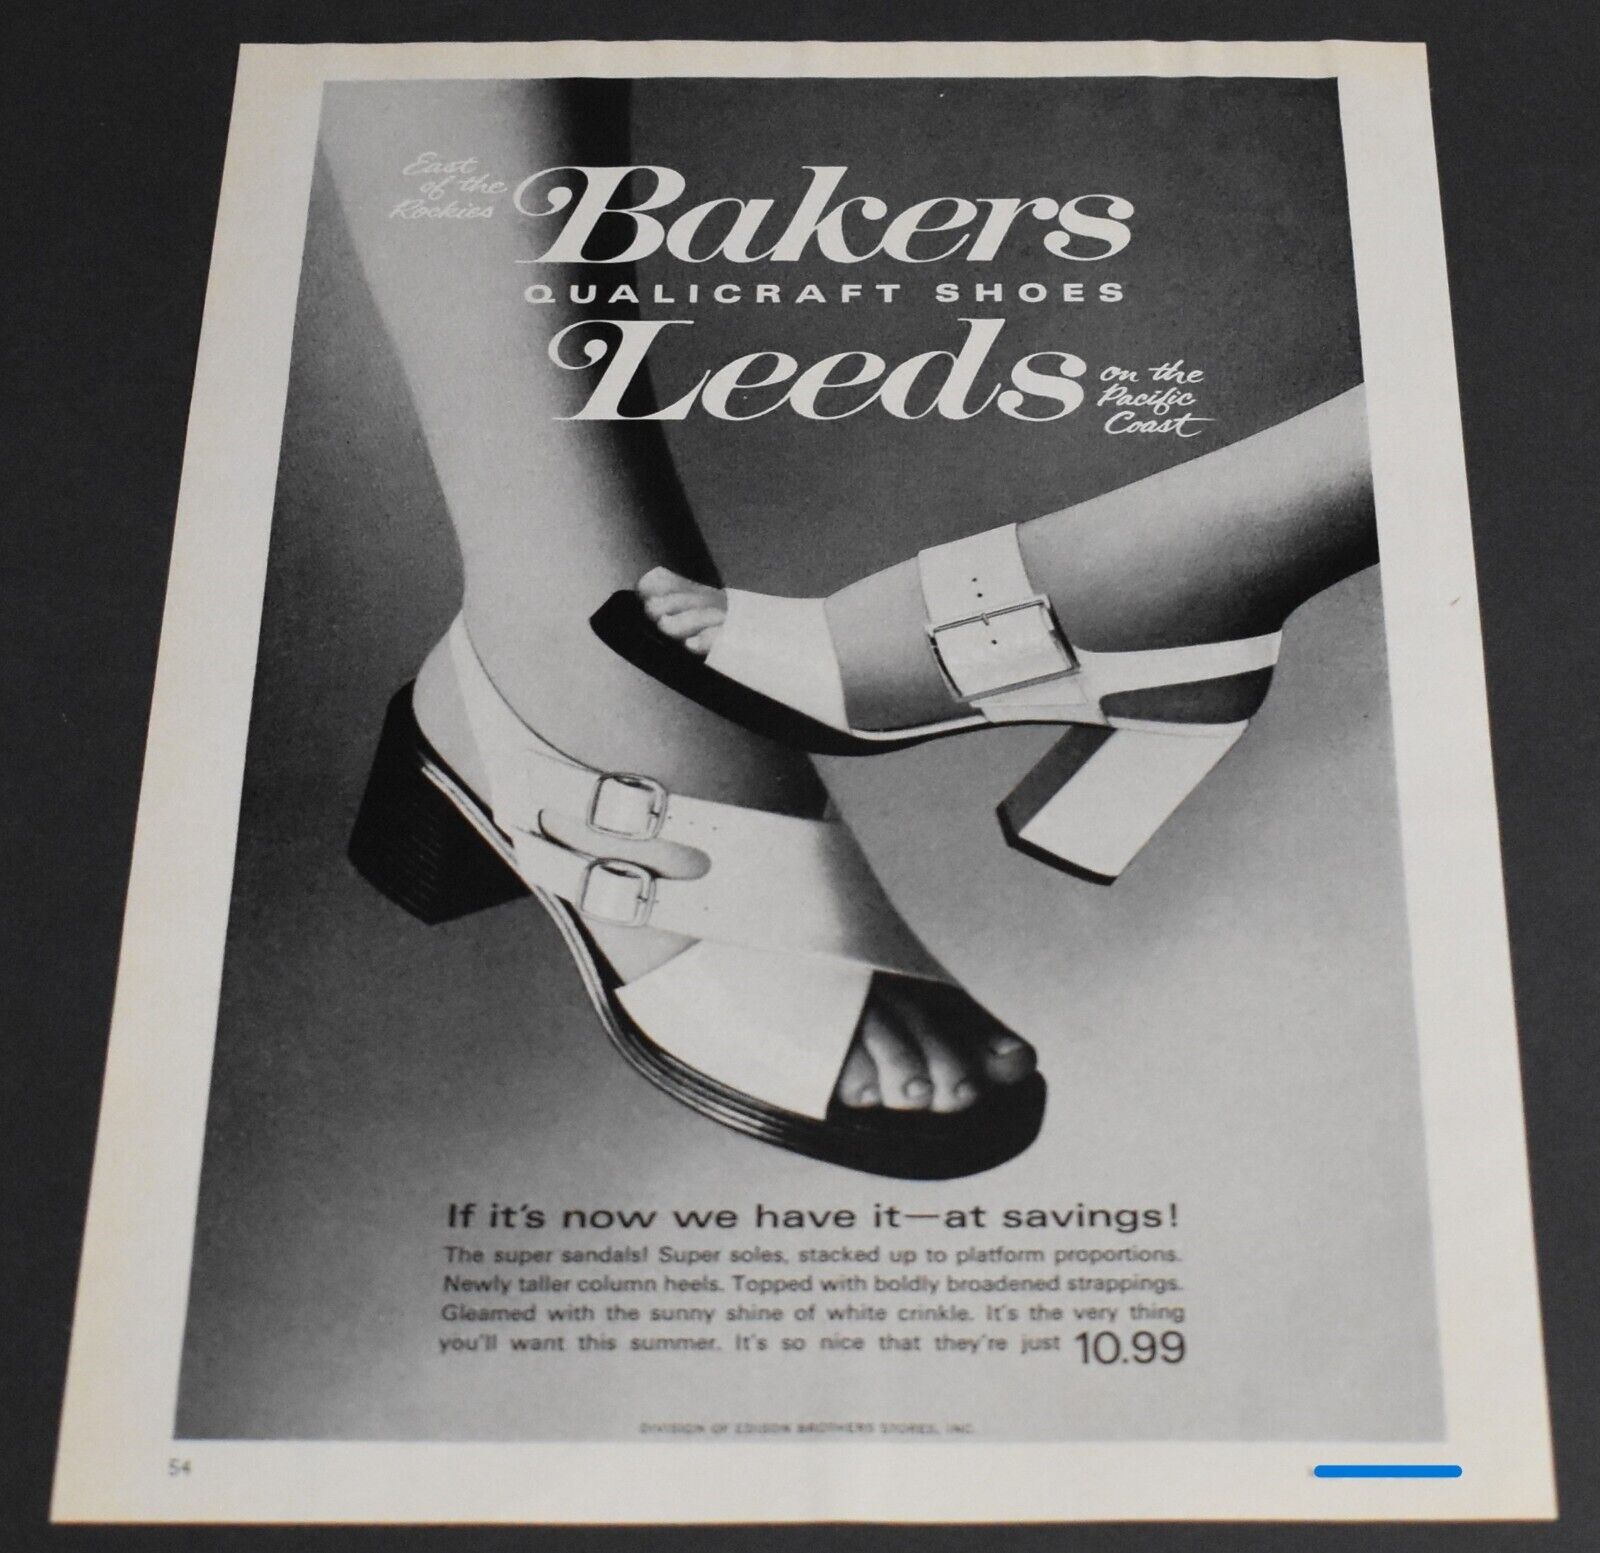 1971 Print Ad Sexy Fashion Long Legs Lady Bakers Leeds Qualicraft Heels Feminine